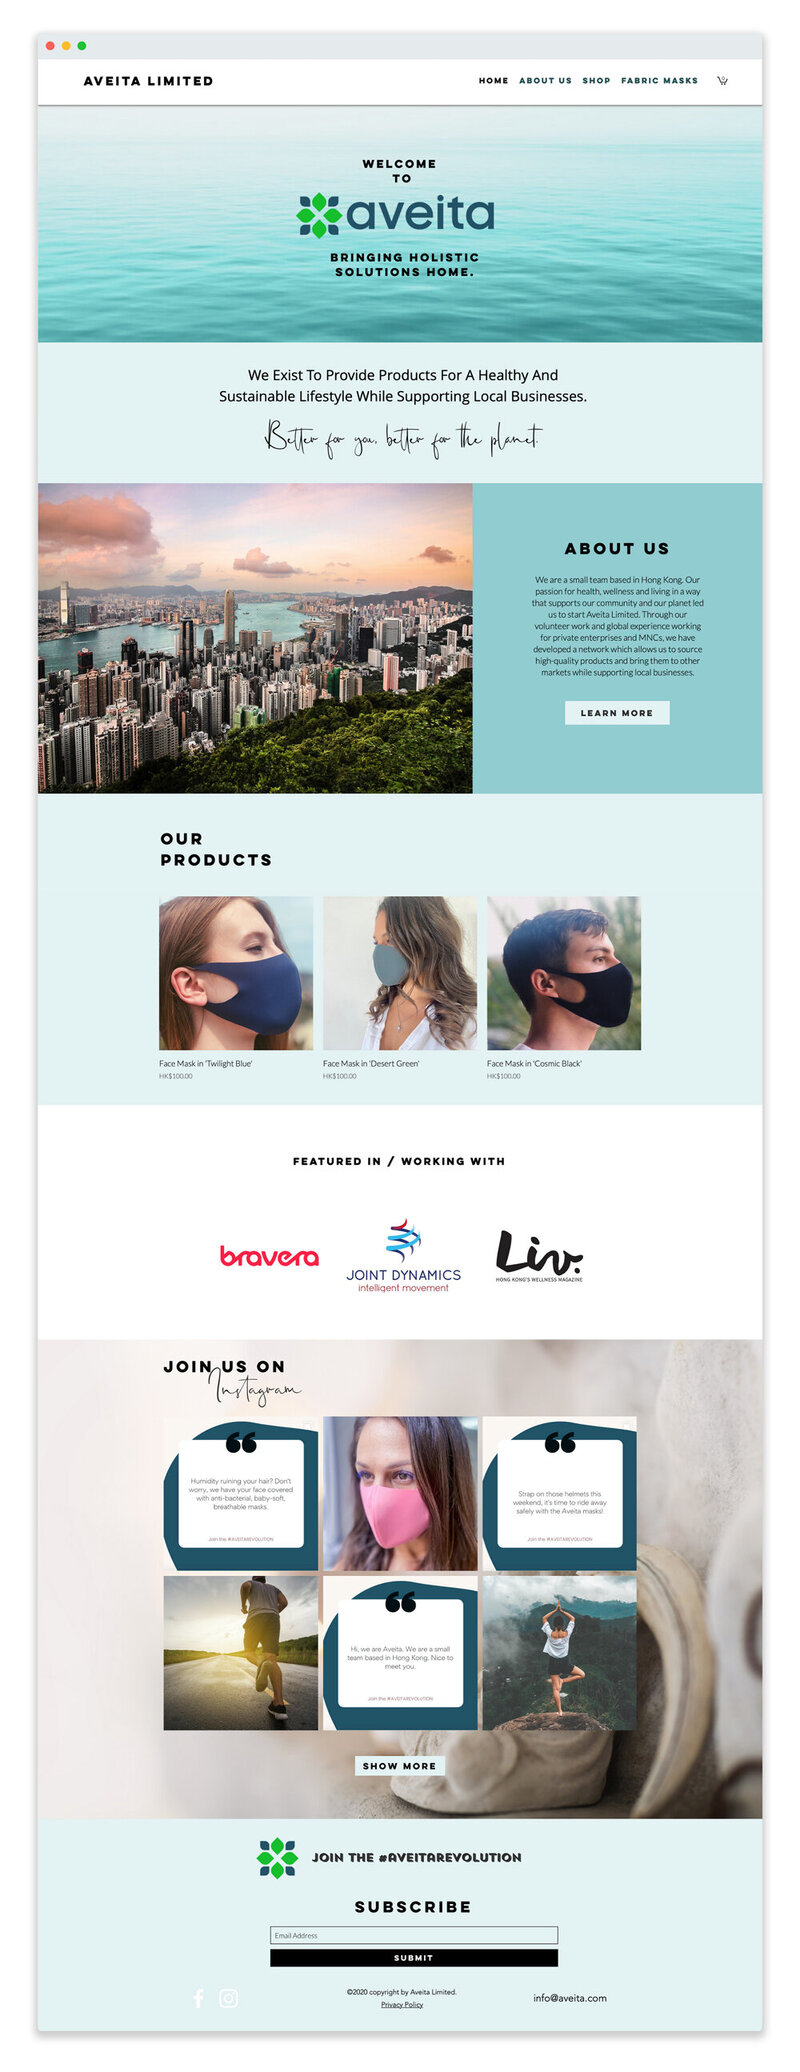 E-Commerce Website Design Service in Hong Kong by Web Designer Kyra Janelle for Lifestyle Brand, Aveita Limited.